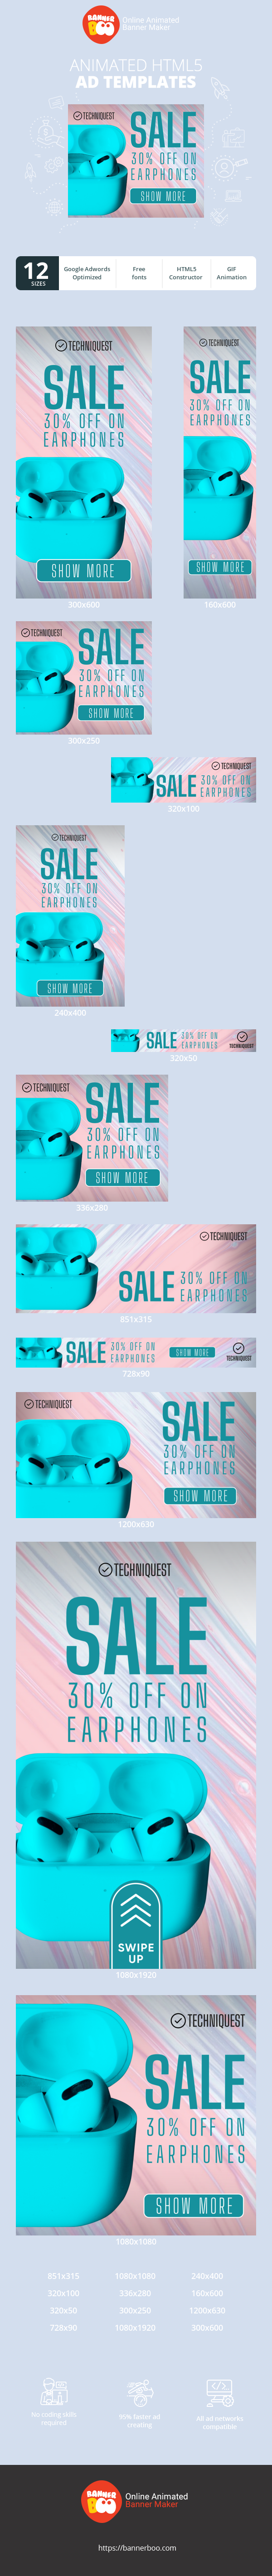 Banner ad template — Sale — 30% Off On Earphones